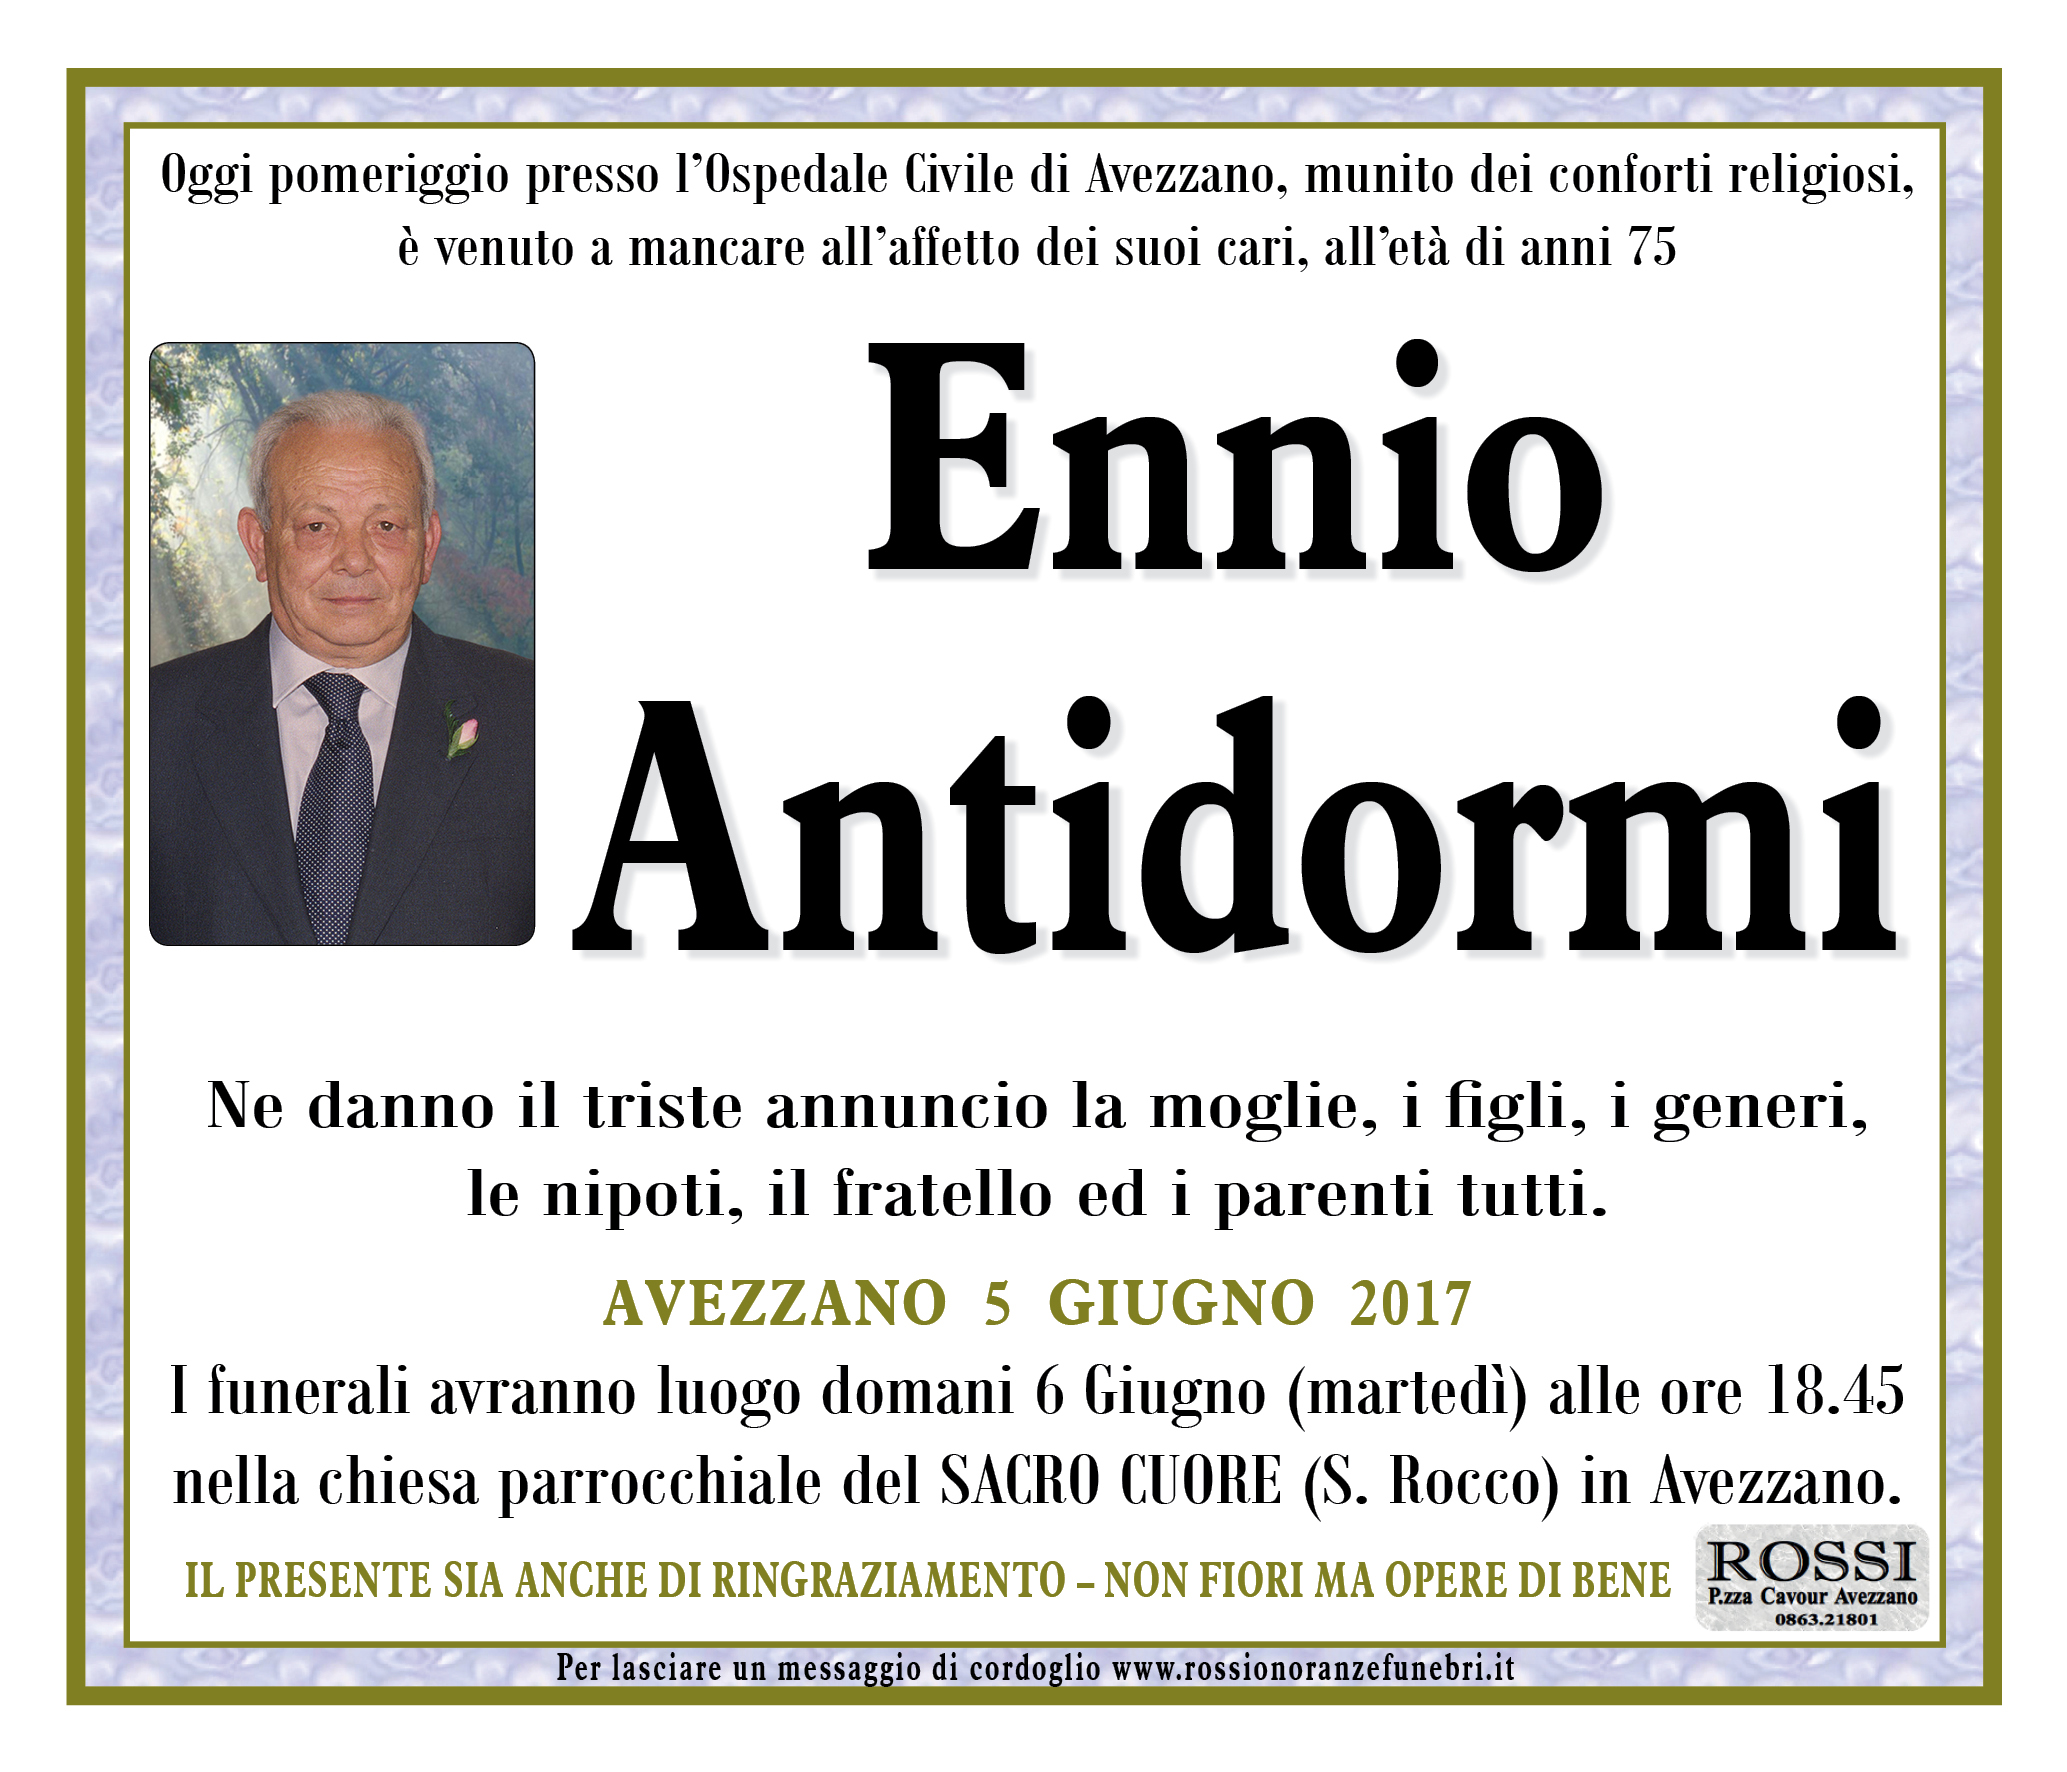 Ennio Antidormi